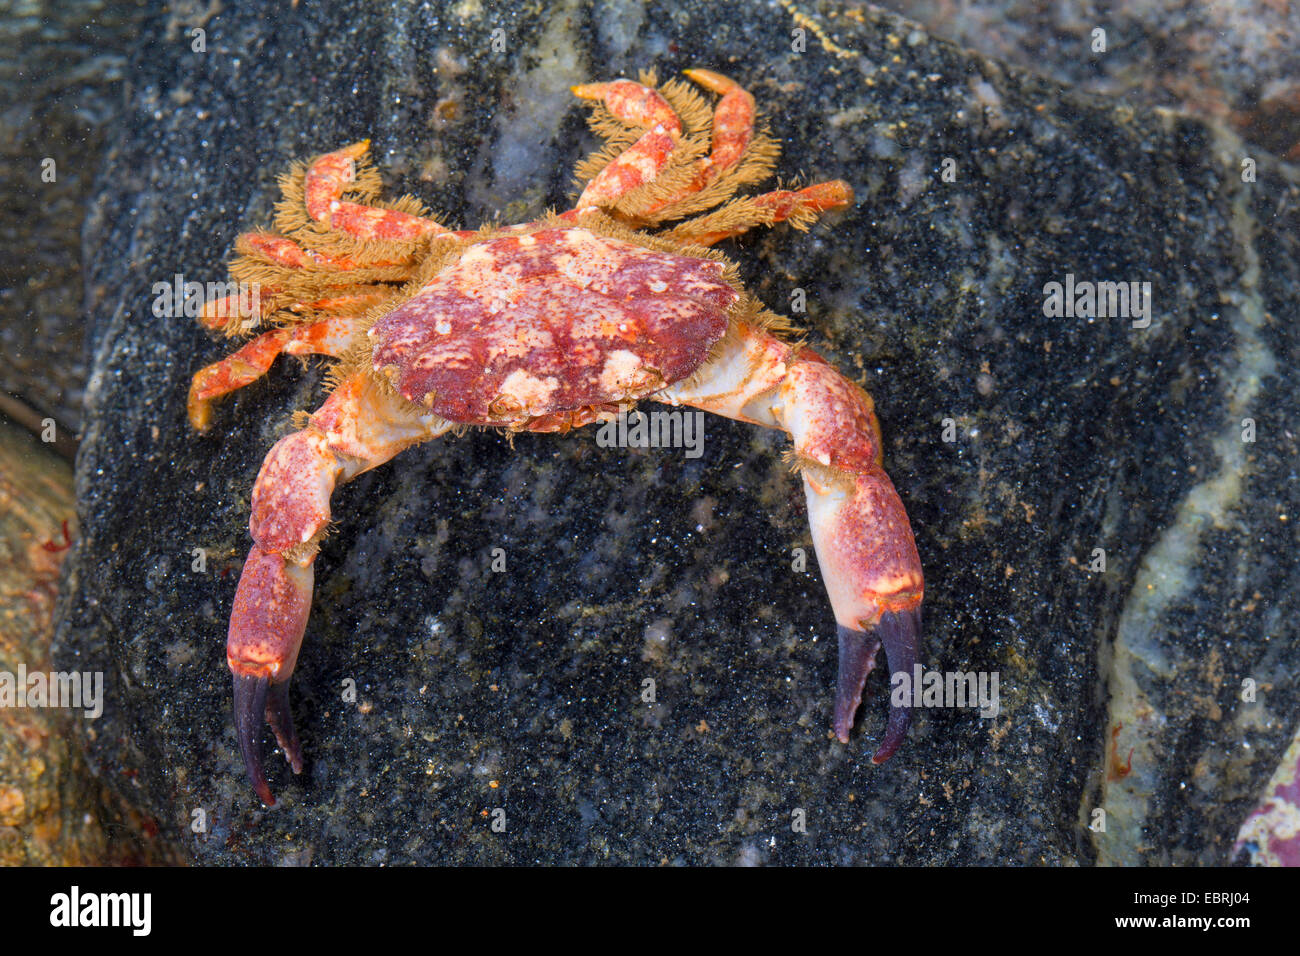 Risso's crab, Rissos crab, Lesser furrowed crab (Xantho pilipes), sitting on a rock Stock Photo